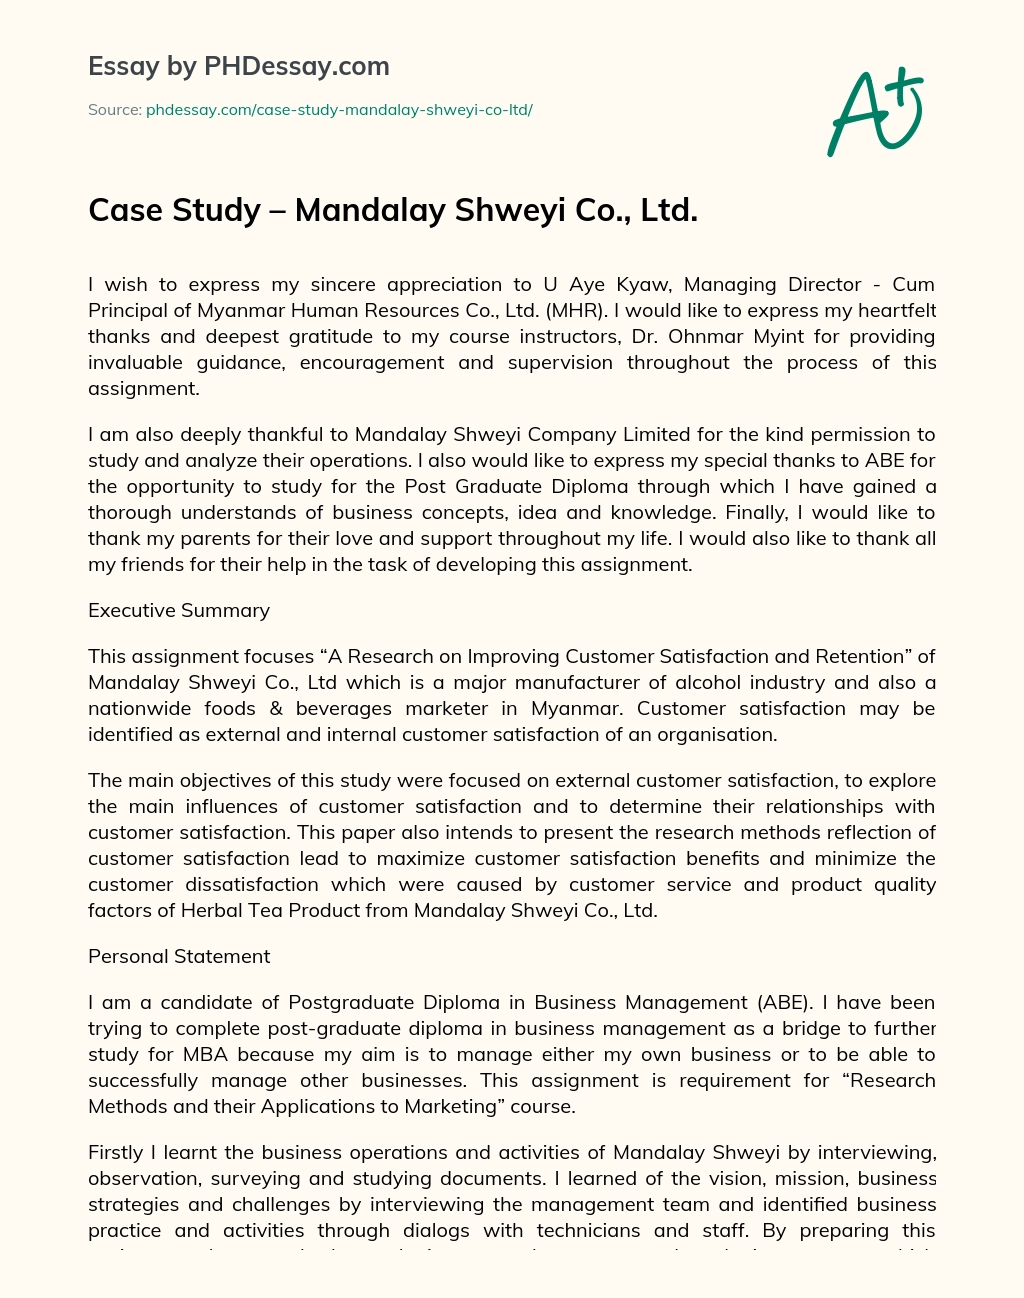 Case Study – Mandalay Shweyi Co., Ltd. essay